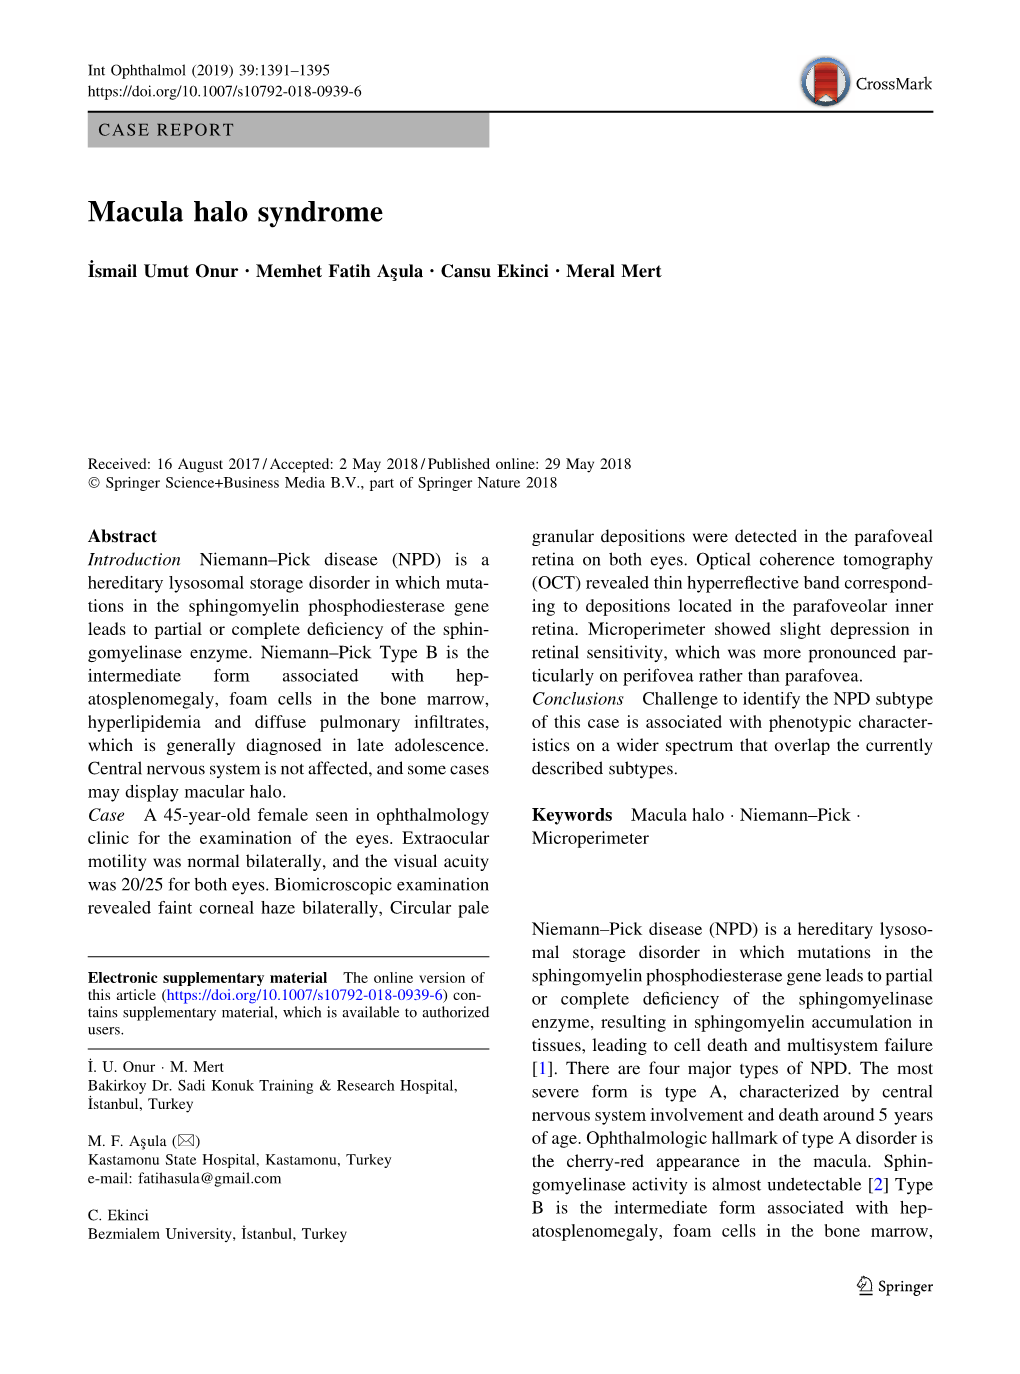 Macula Halo Syndrome